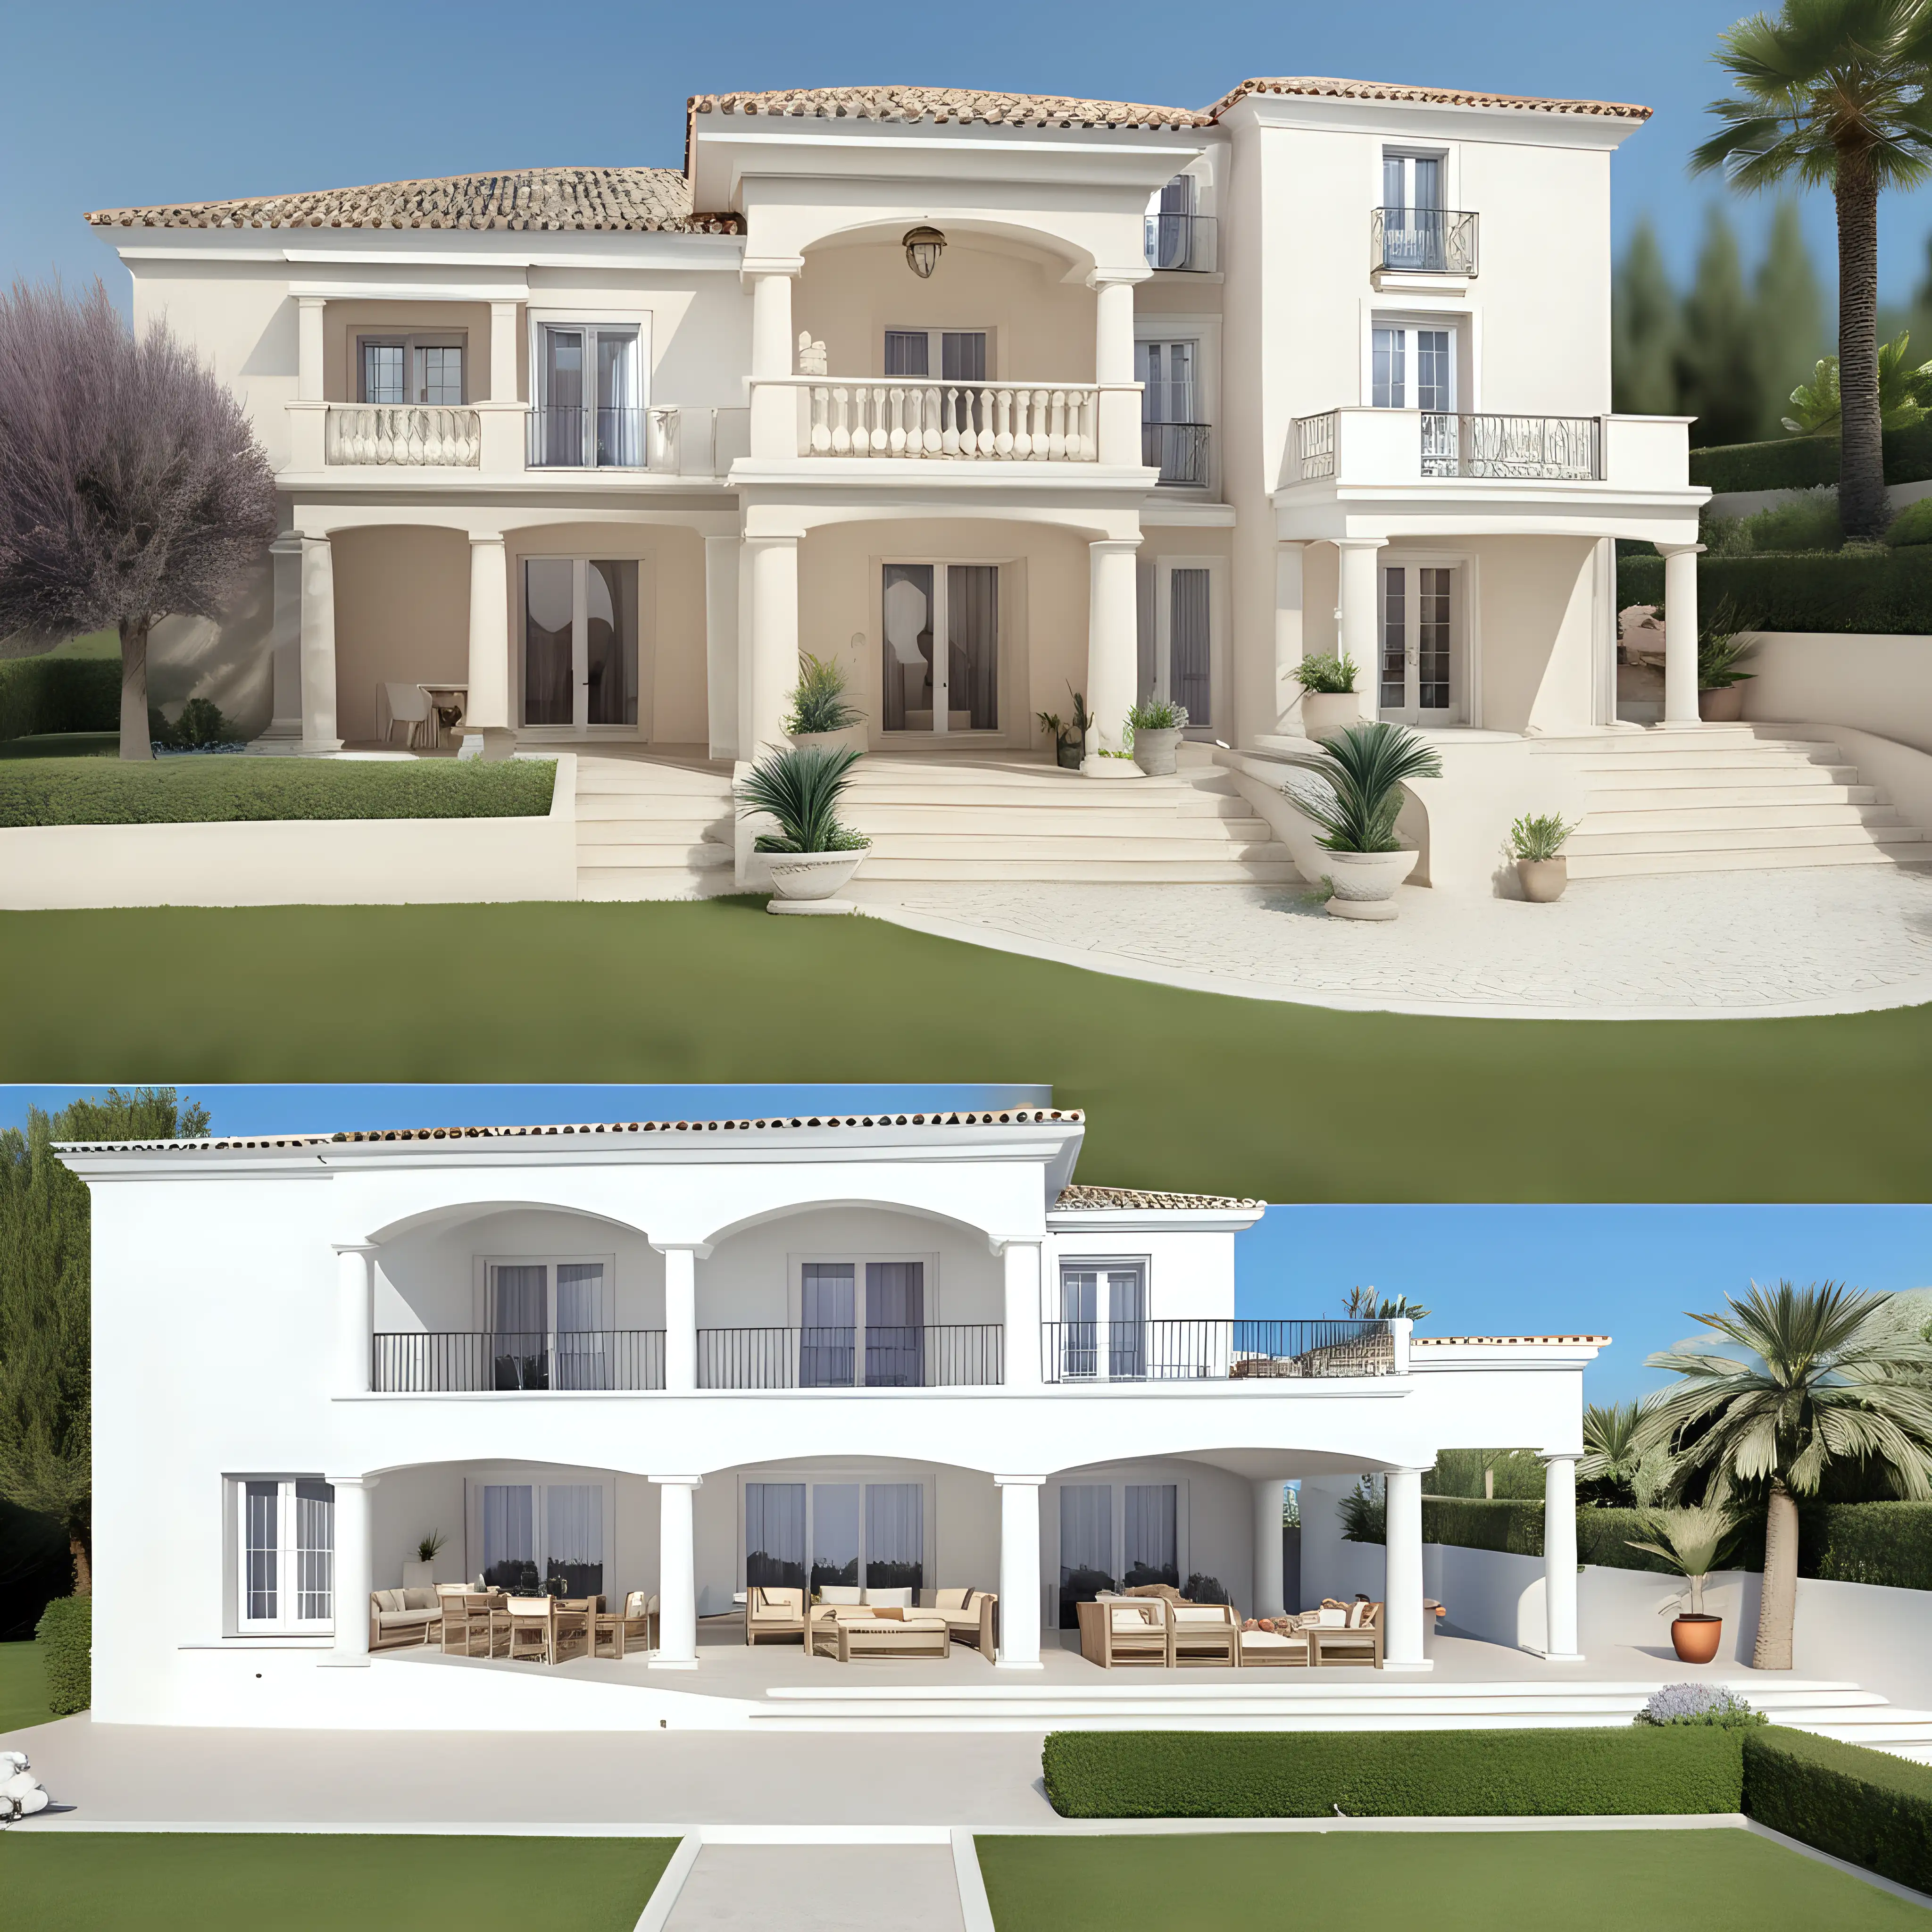 Mediterranean Villa Floor Plans TwoStory Greek Style with Separate Apartments